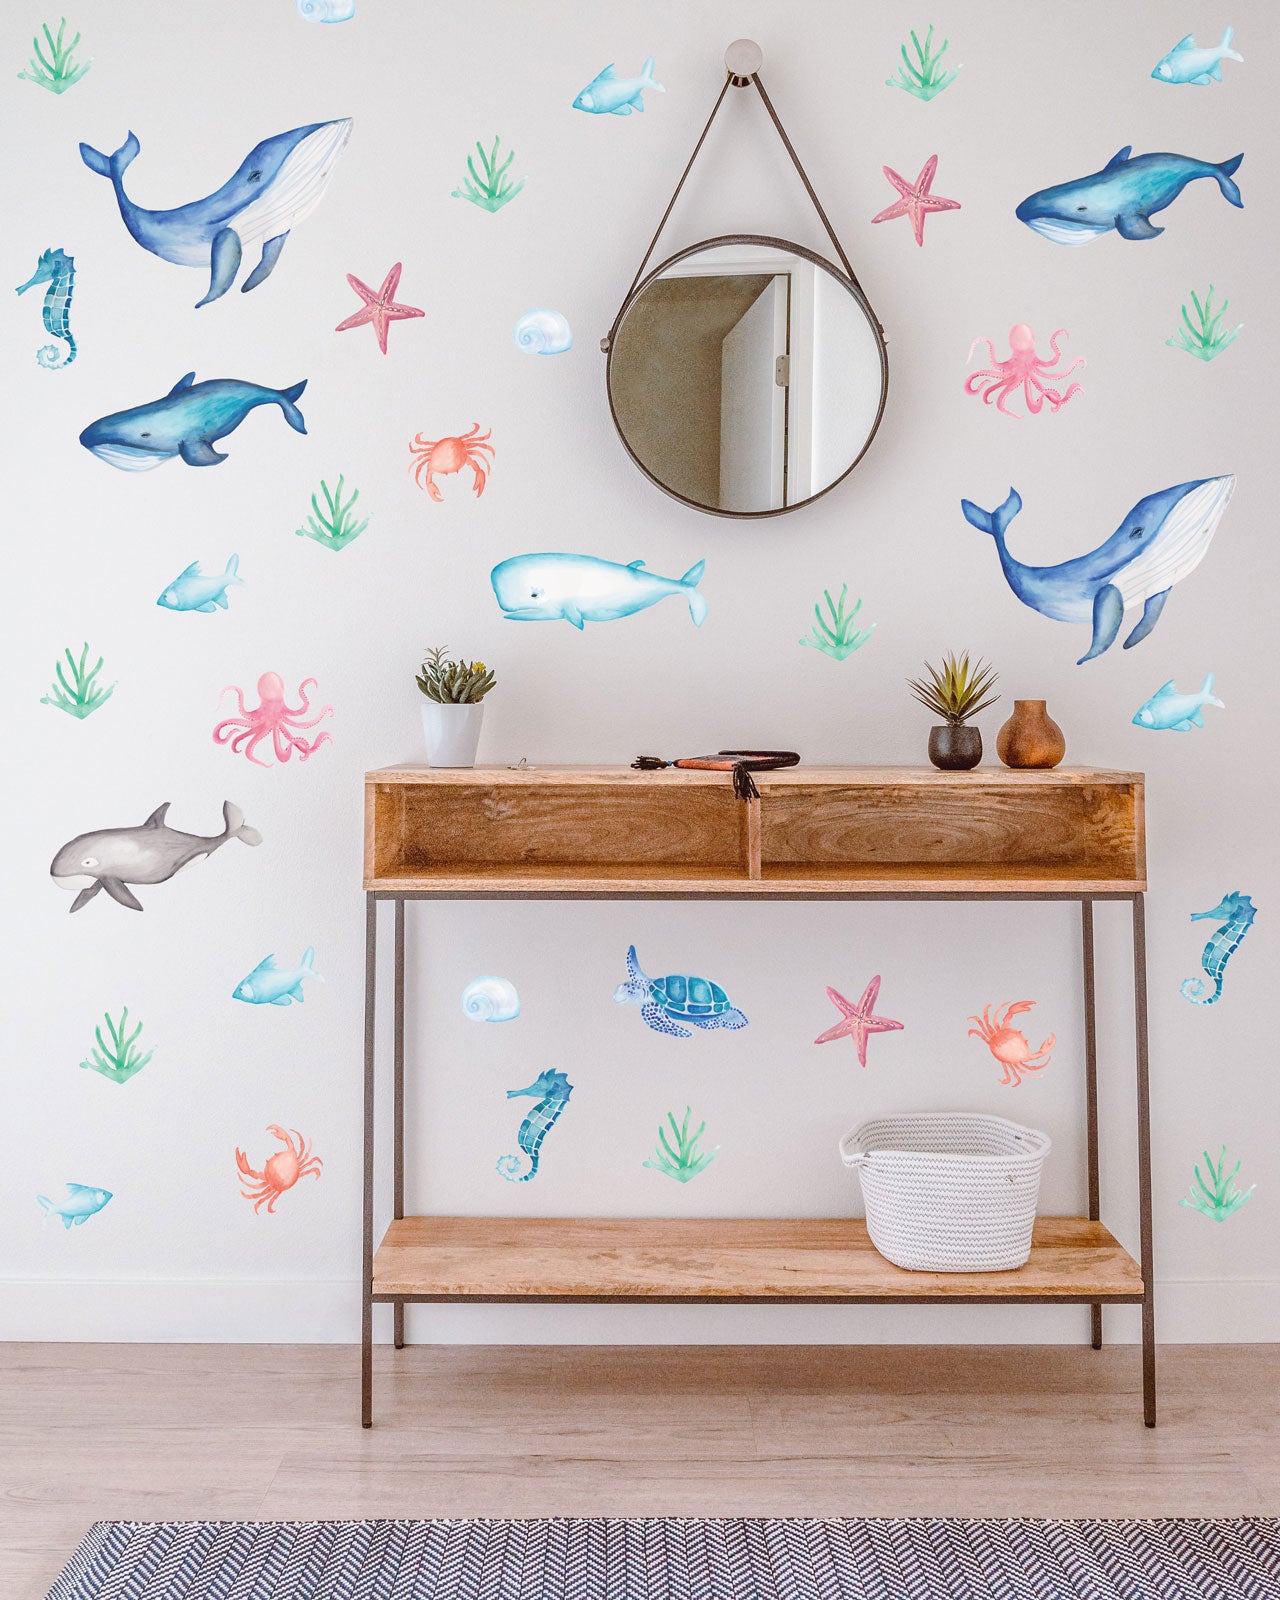 Sea Animals, Under the Sea, Fabric Wall Sticker Set - A Creative Hart